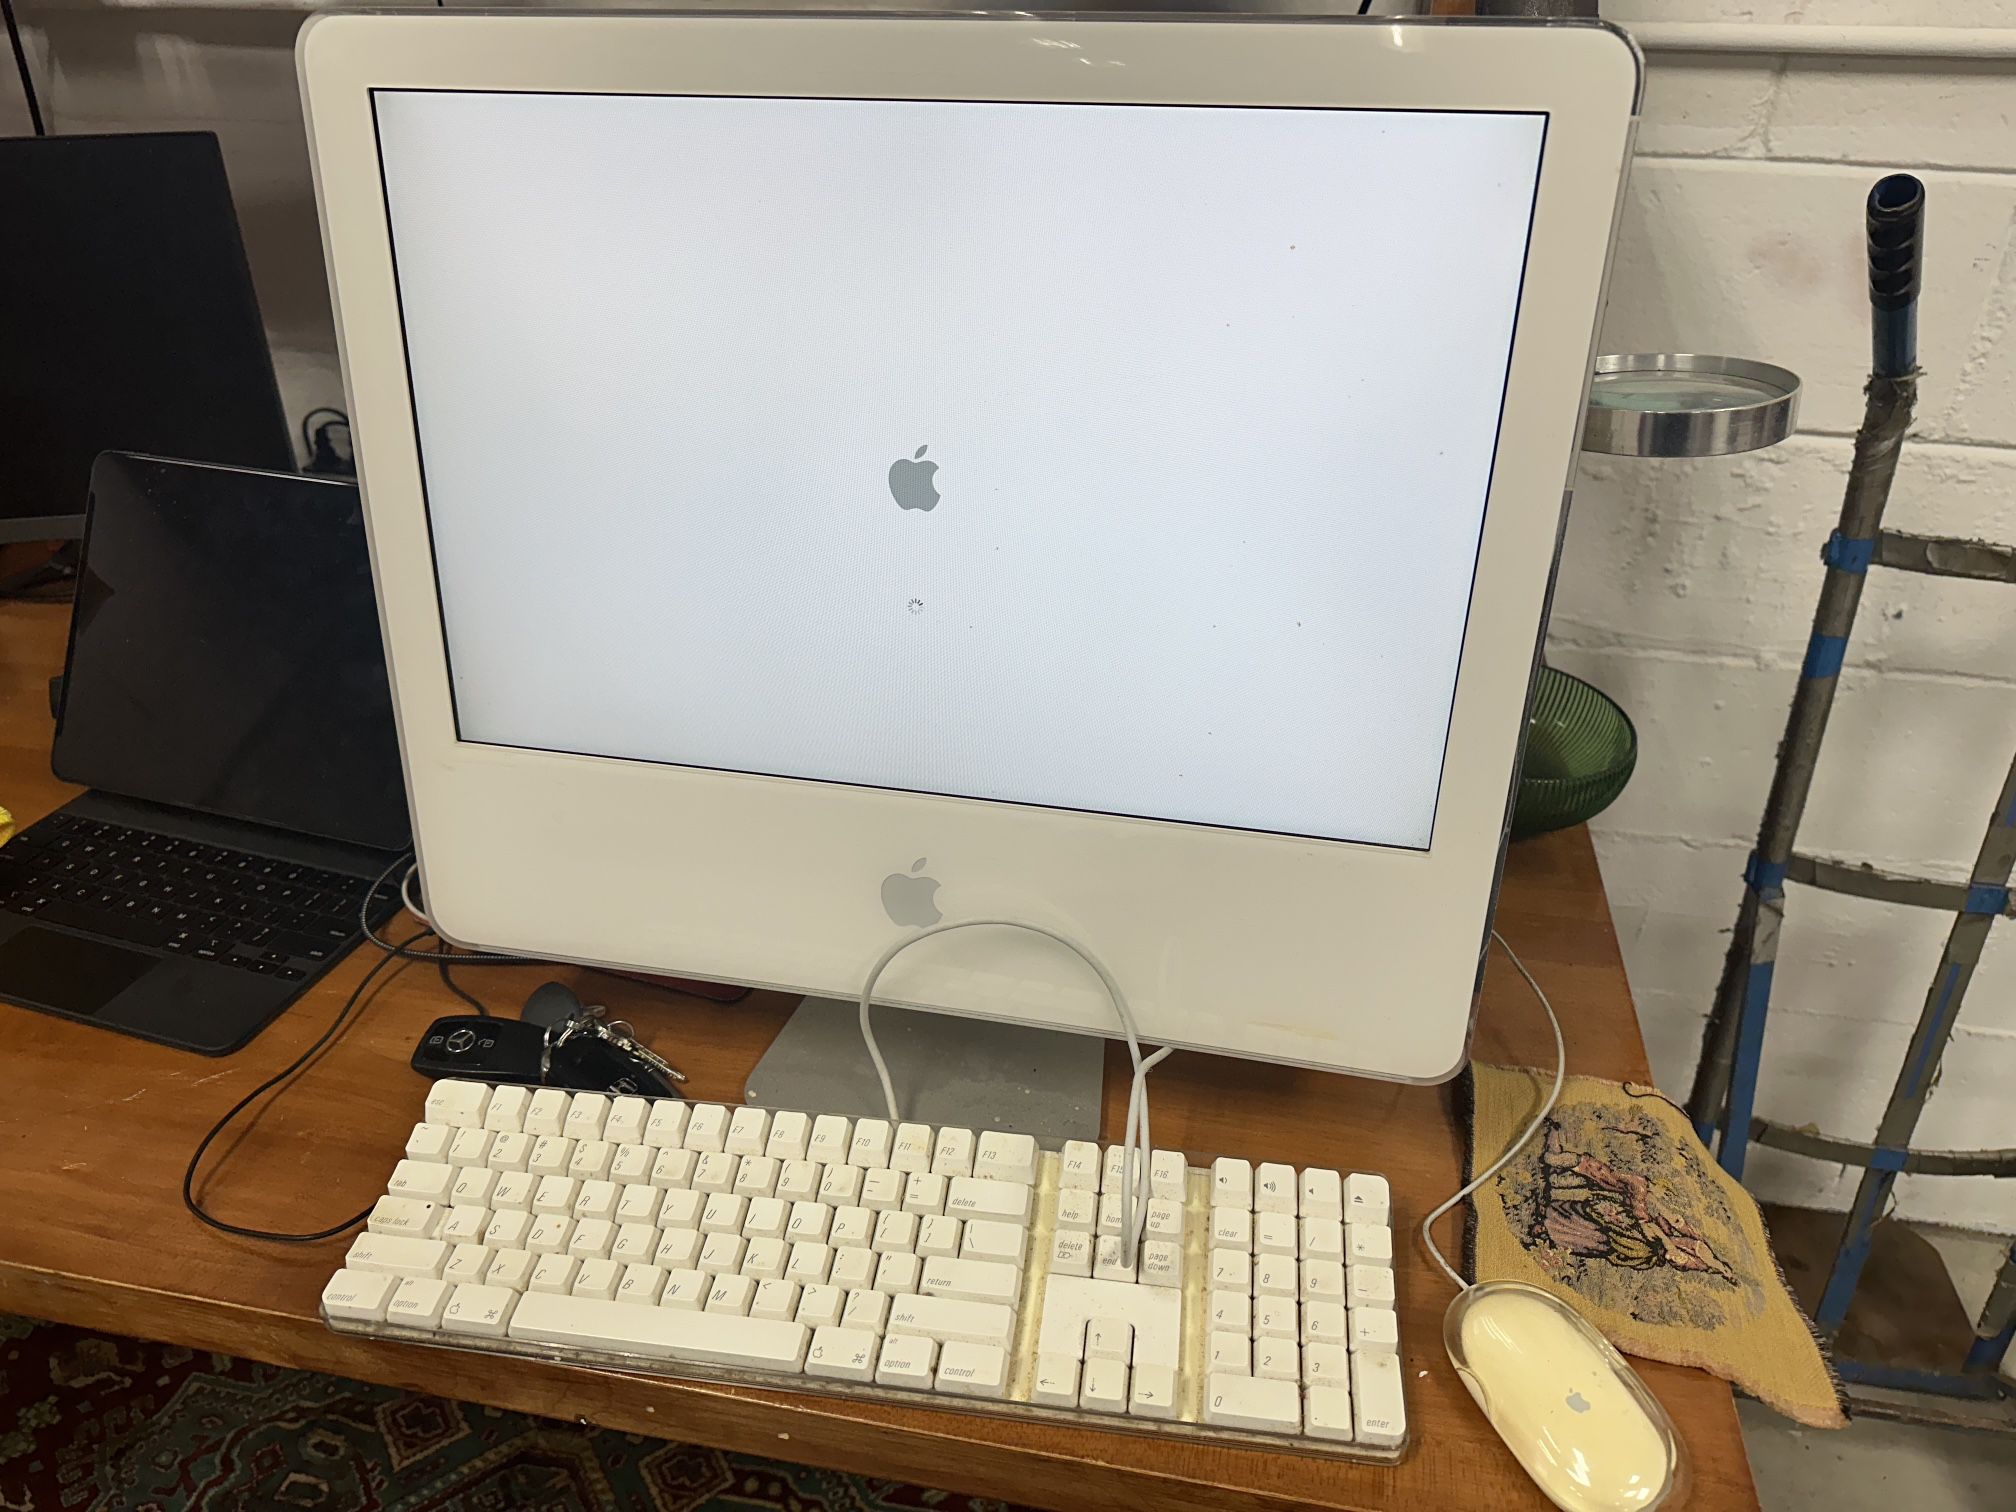 2004 2005 Apple iMac G5 # M9250LL/A A1076 - Desktop Monitor Computer & Keyboard Mouse in Original Box — Parts - Vintage Electronics